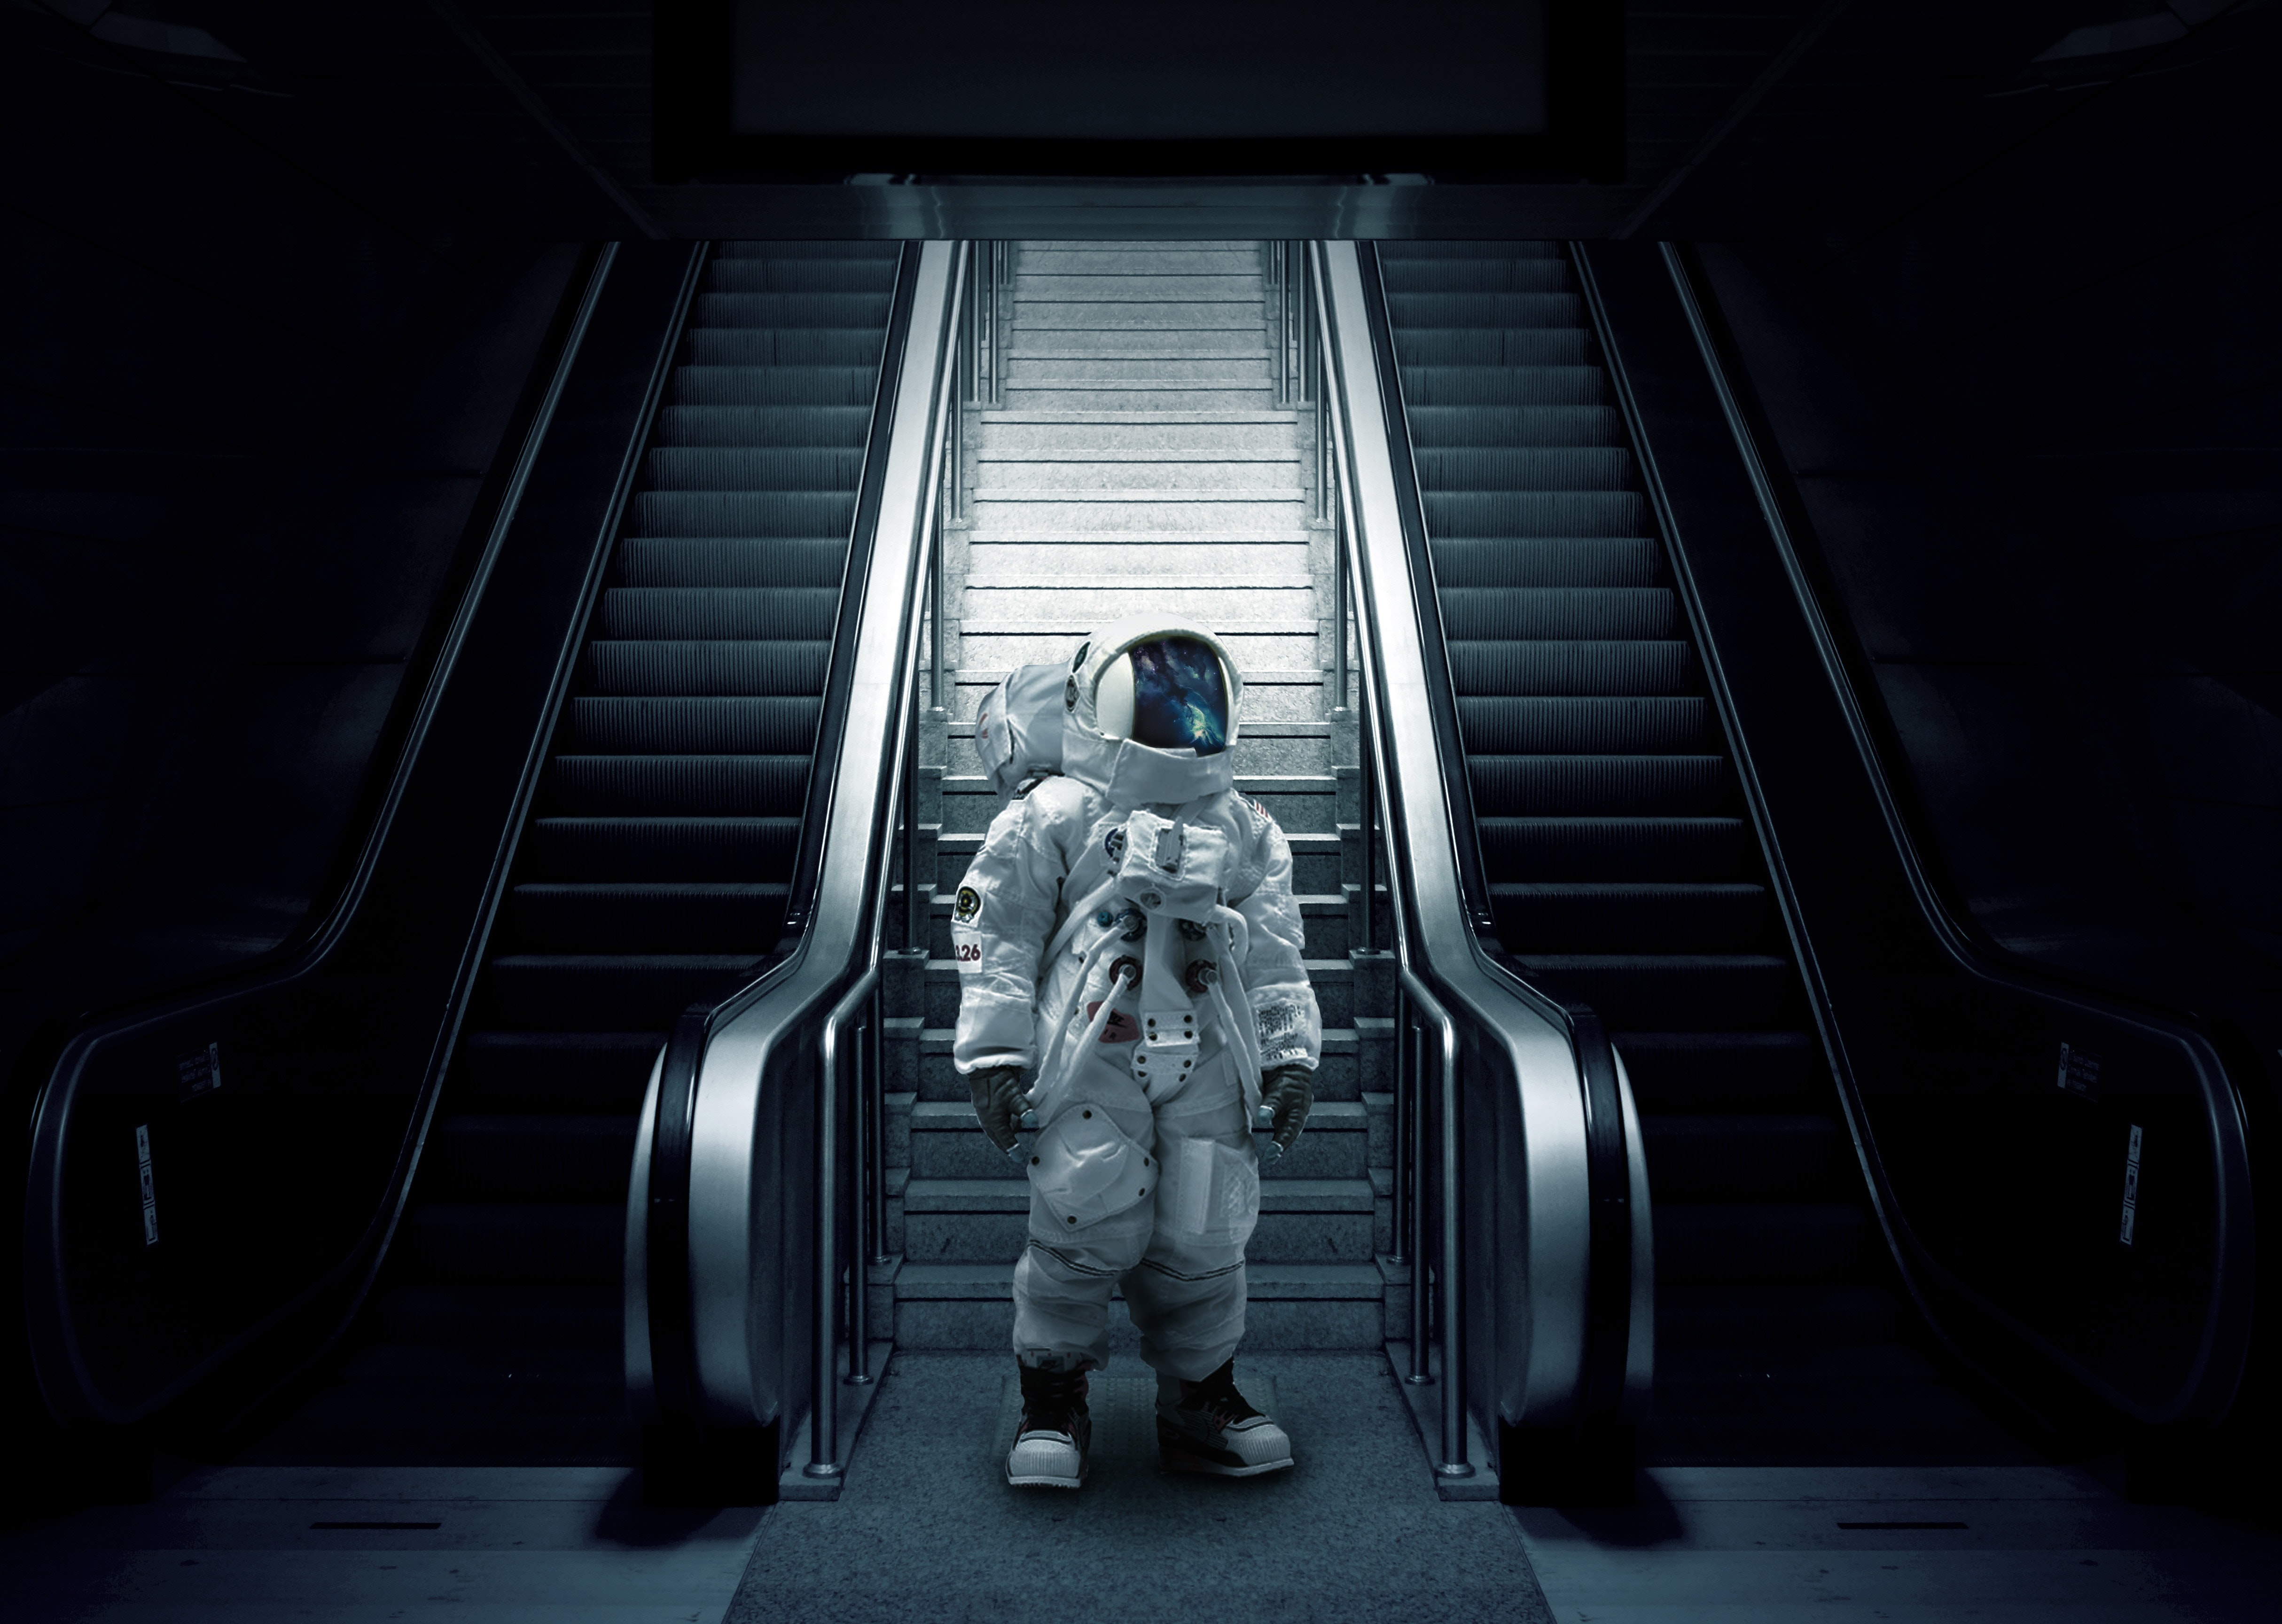 space suit, miscellanea, miscellaneous, stairs, ladder, escalator, cosmonaut, spacesuit, astronaut